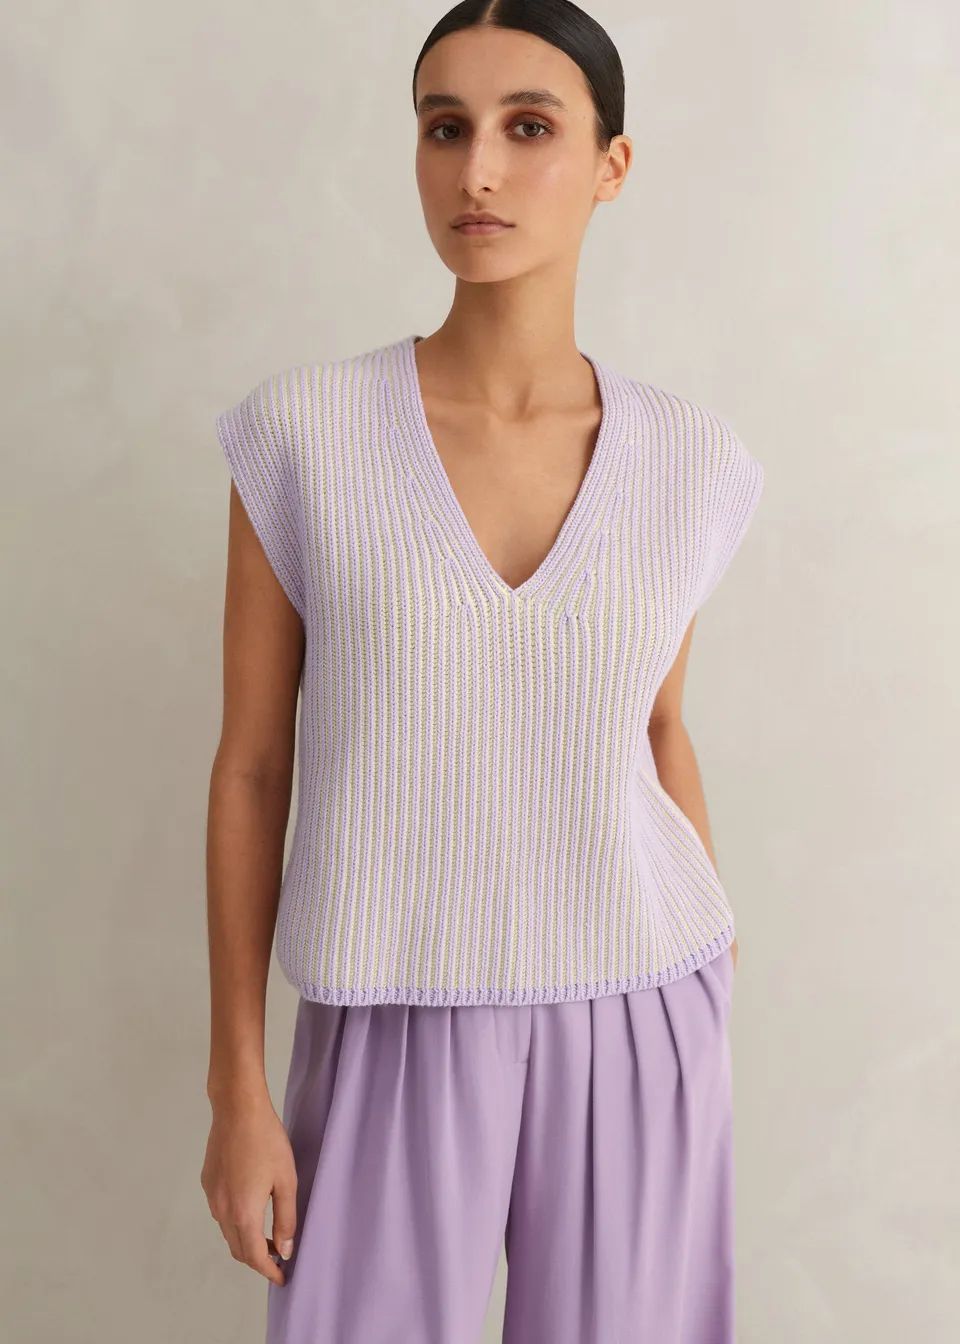 Soft-Touch Rib Cotton Knit Vest | ME+EM Global (Excluding US)